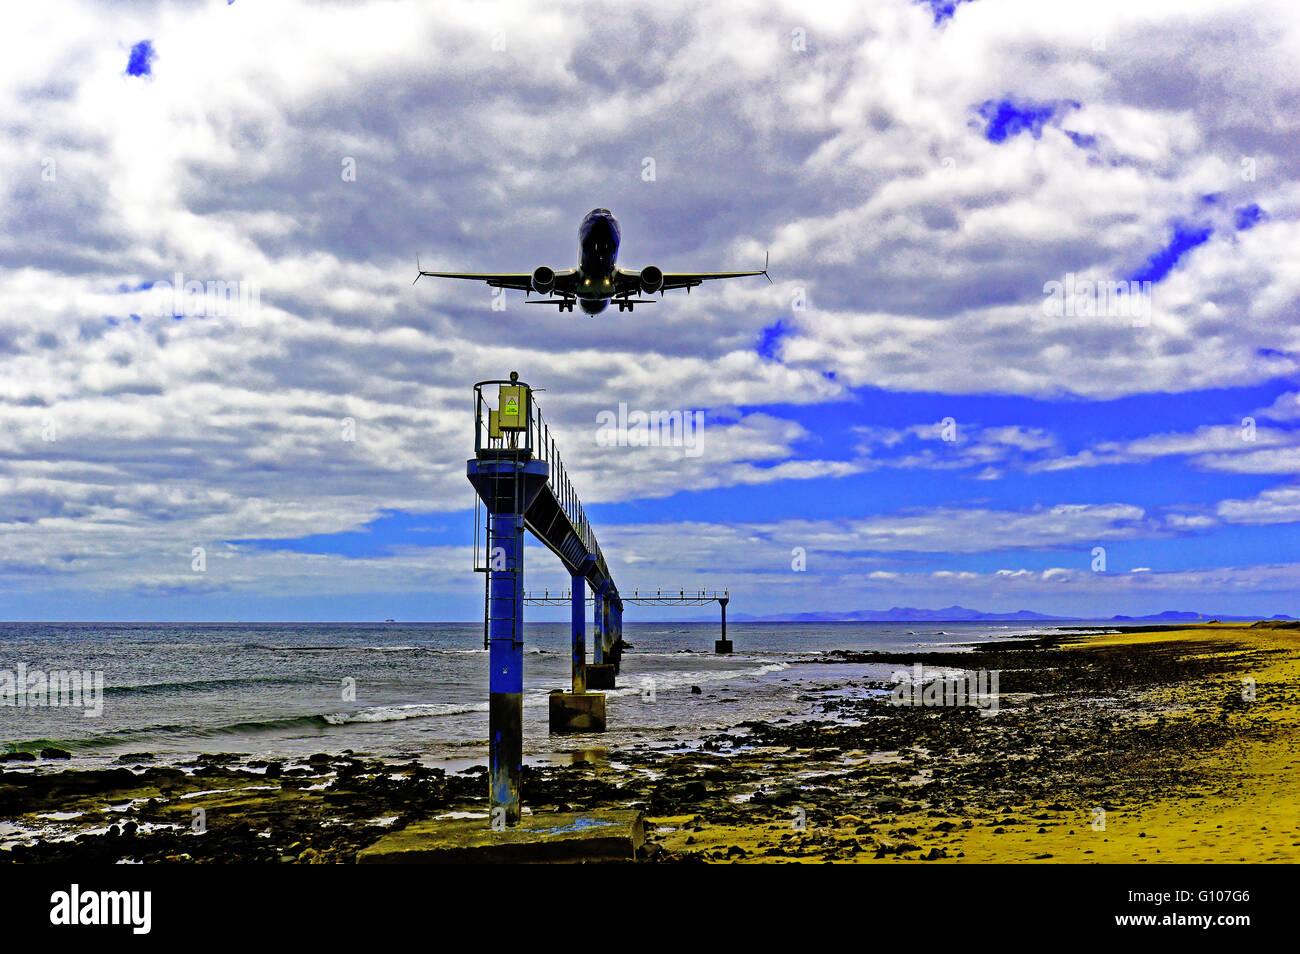 Lanzarote  passenger plane landing at Arrecife airport Stock Photo